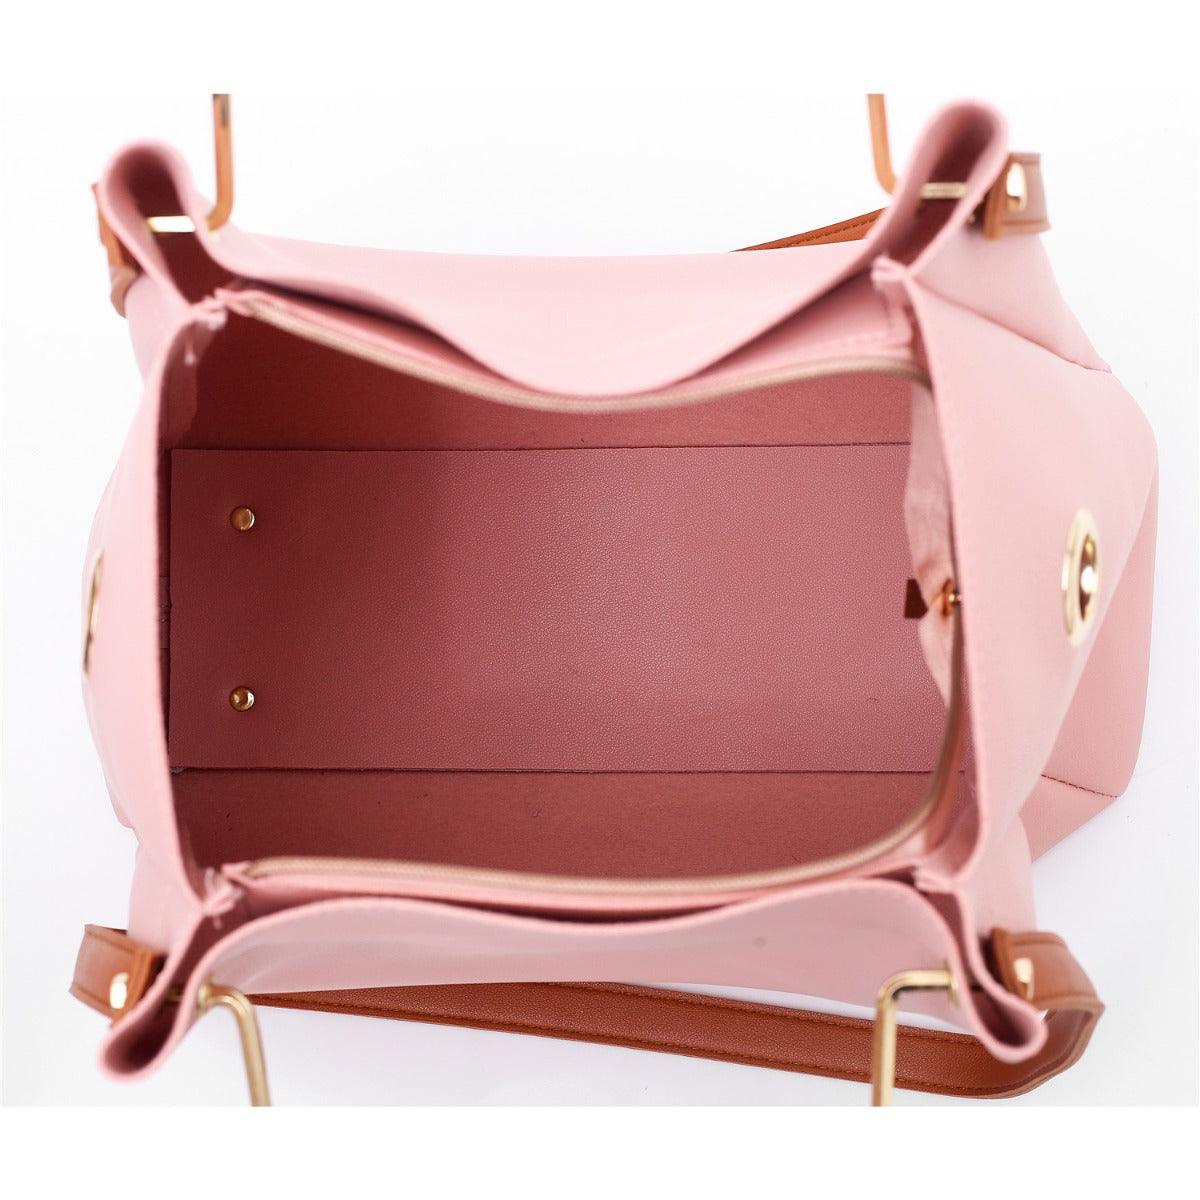 Guluded Leather Portable Handbag-Beige - Obeezi.com